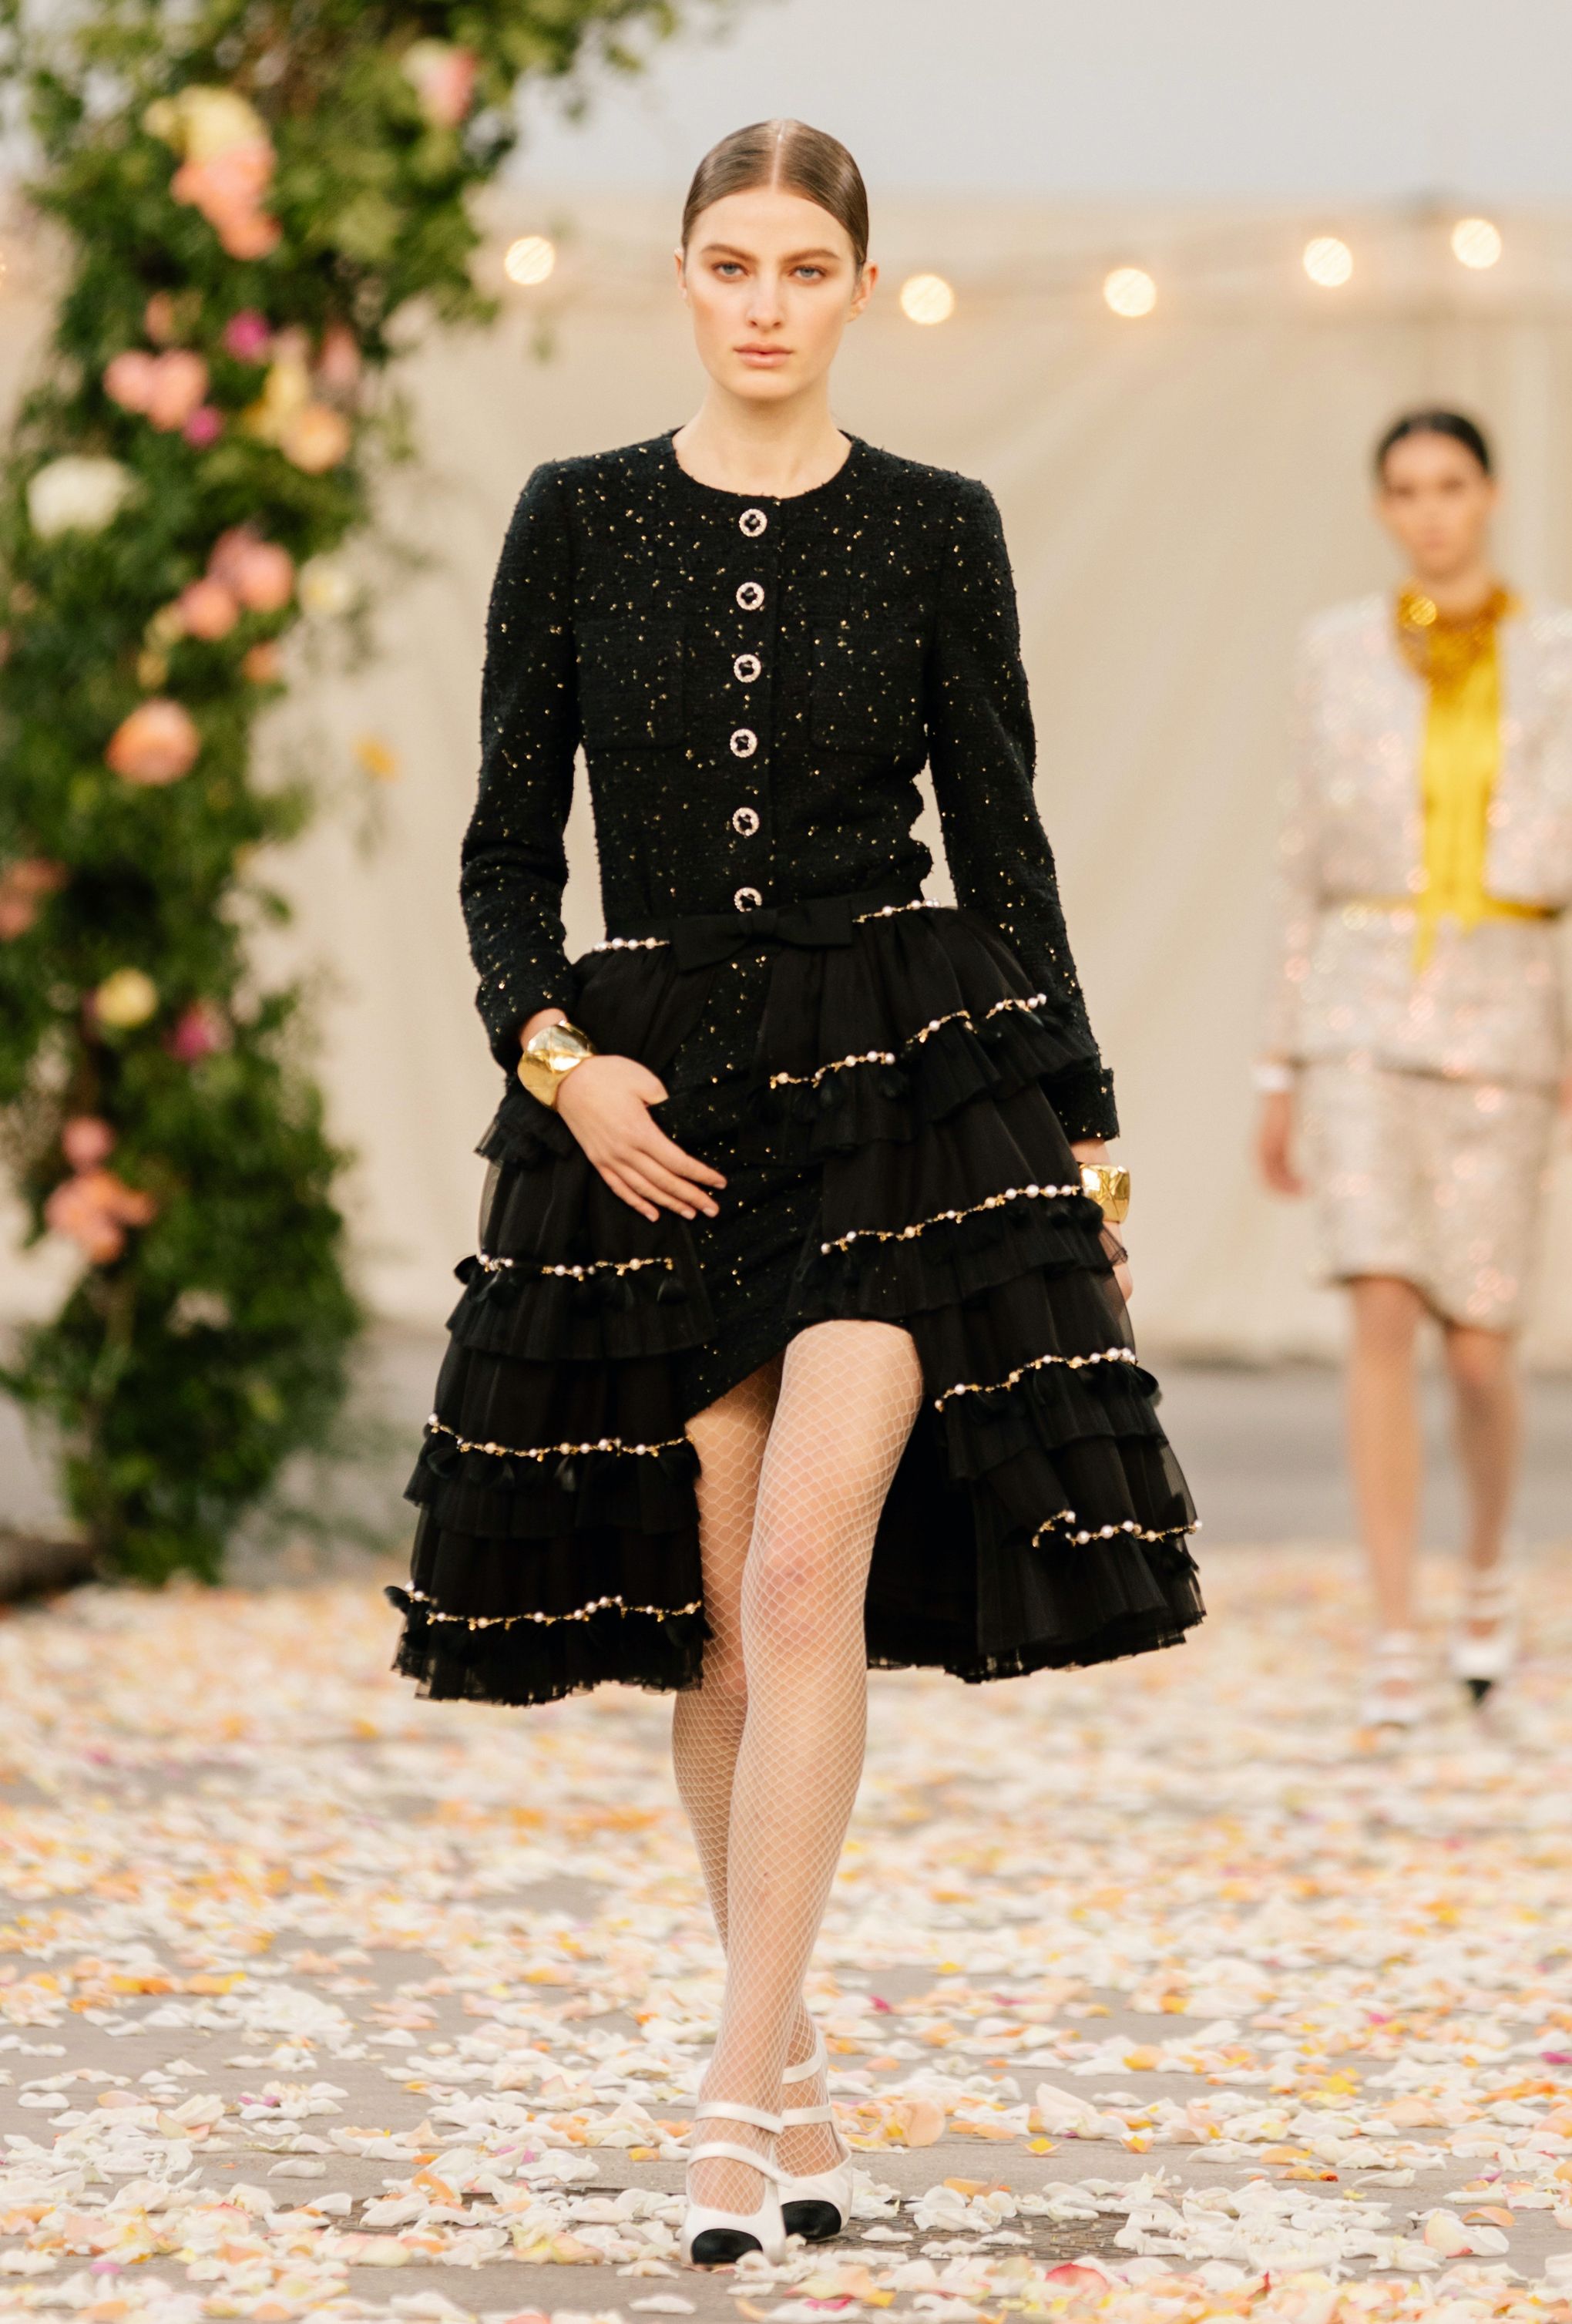 21018-chanel-06  Couture outfits, Fashion, Vogue fashion